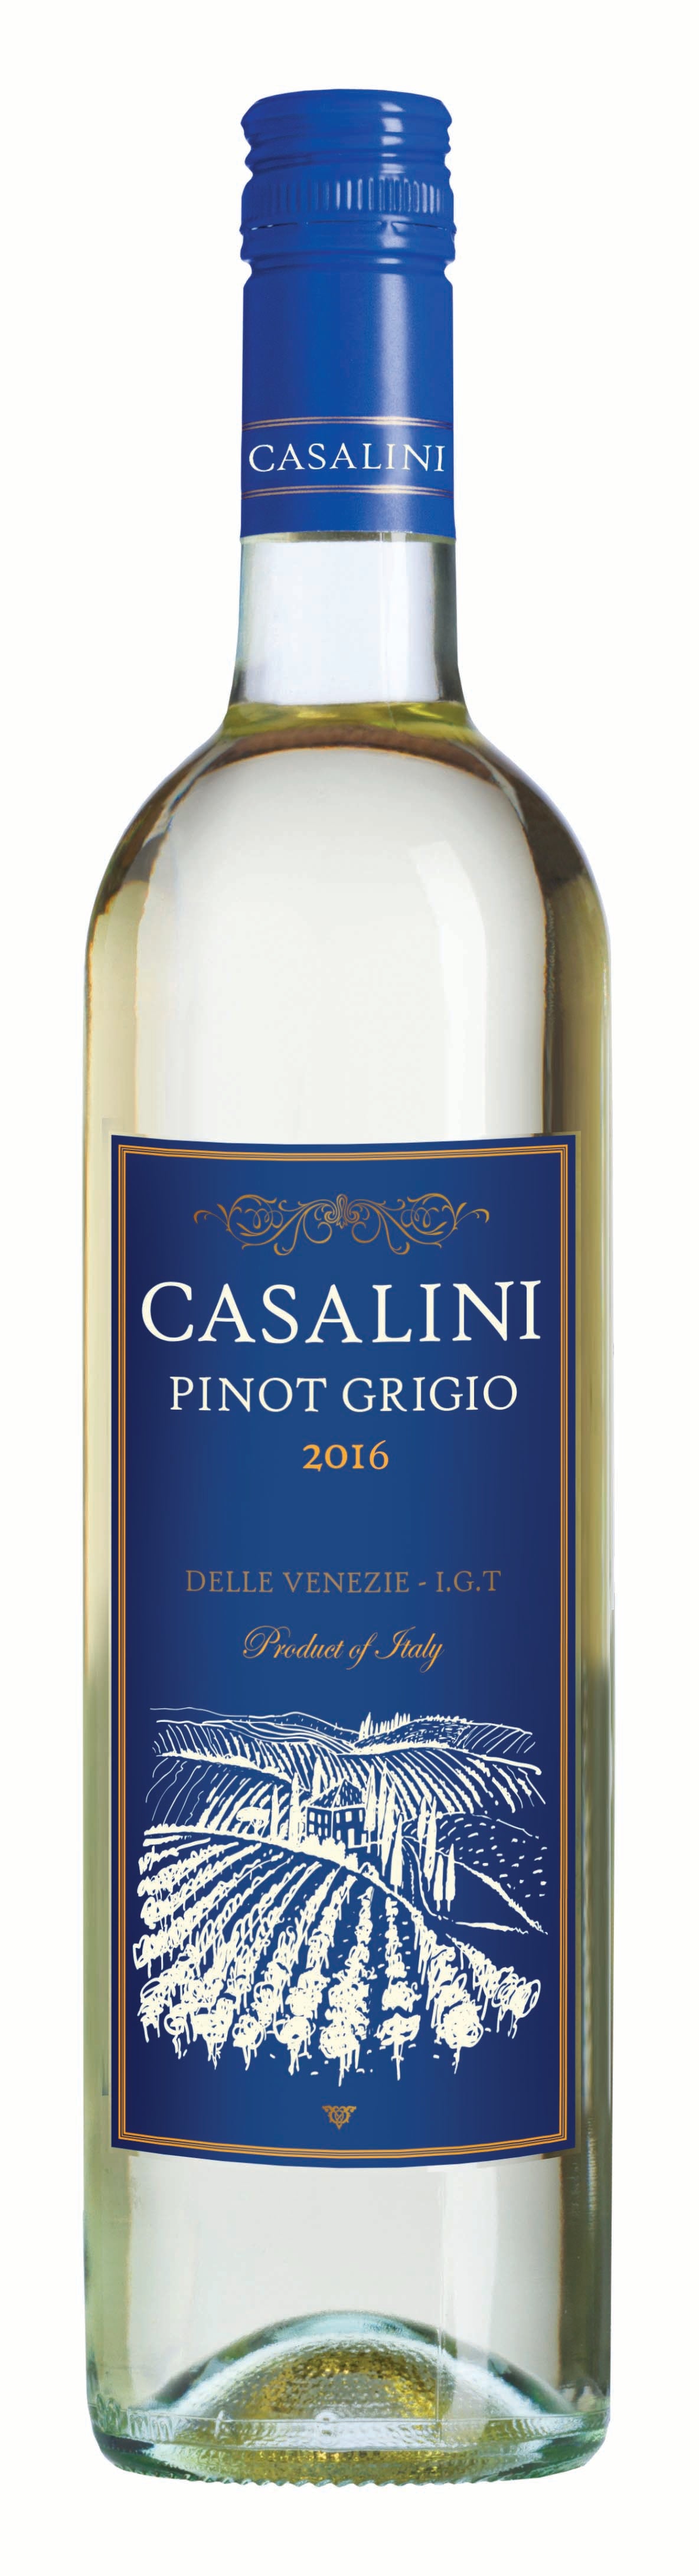 Casalini Pinot Grigio